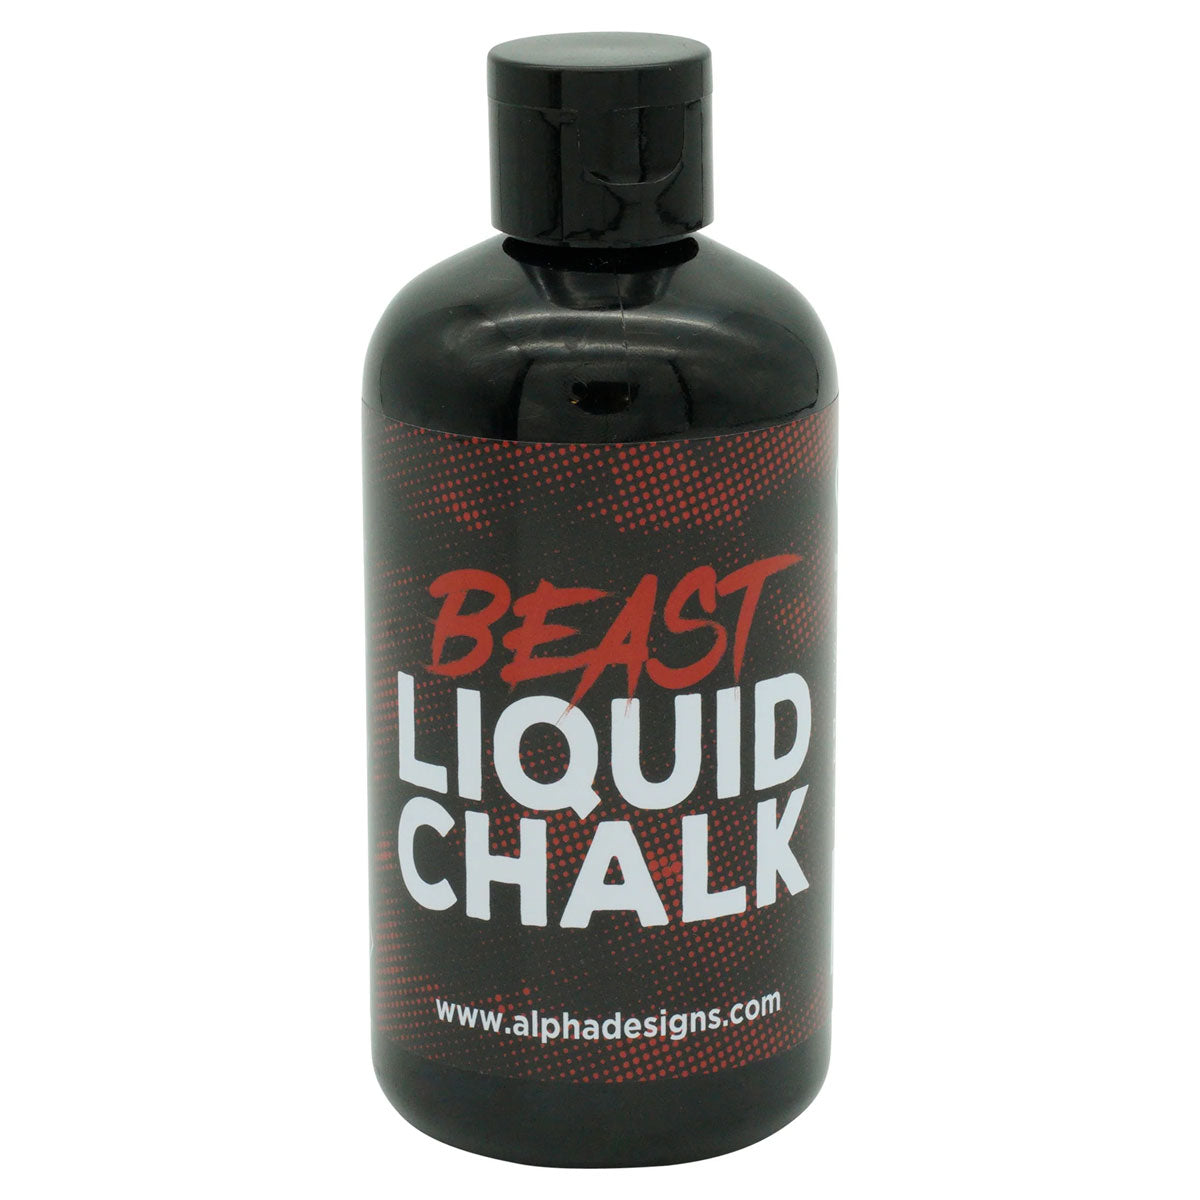 Alpha Designs Beast Liquid Chalk